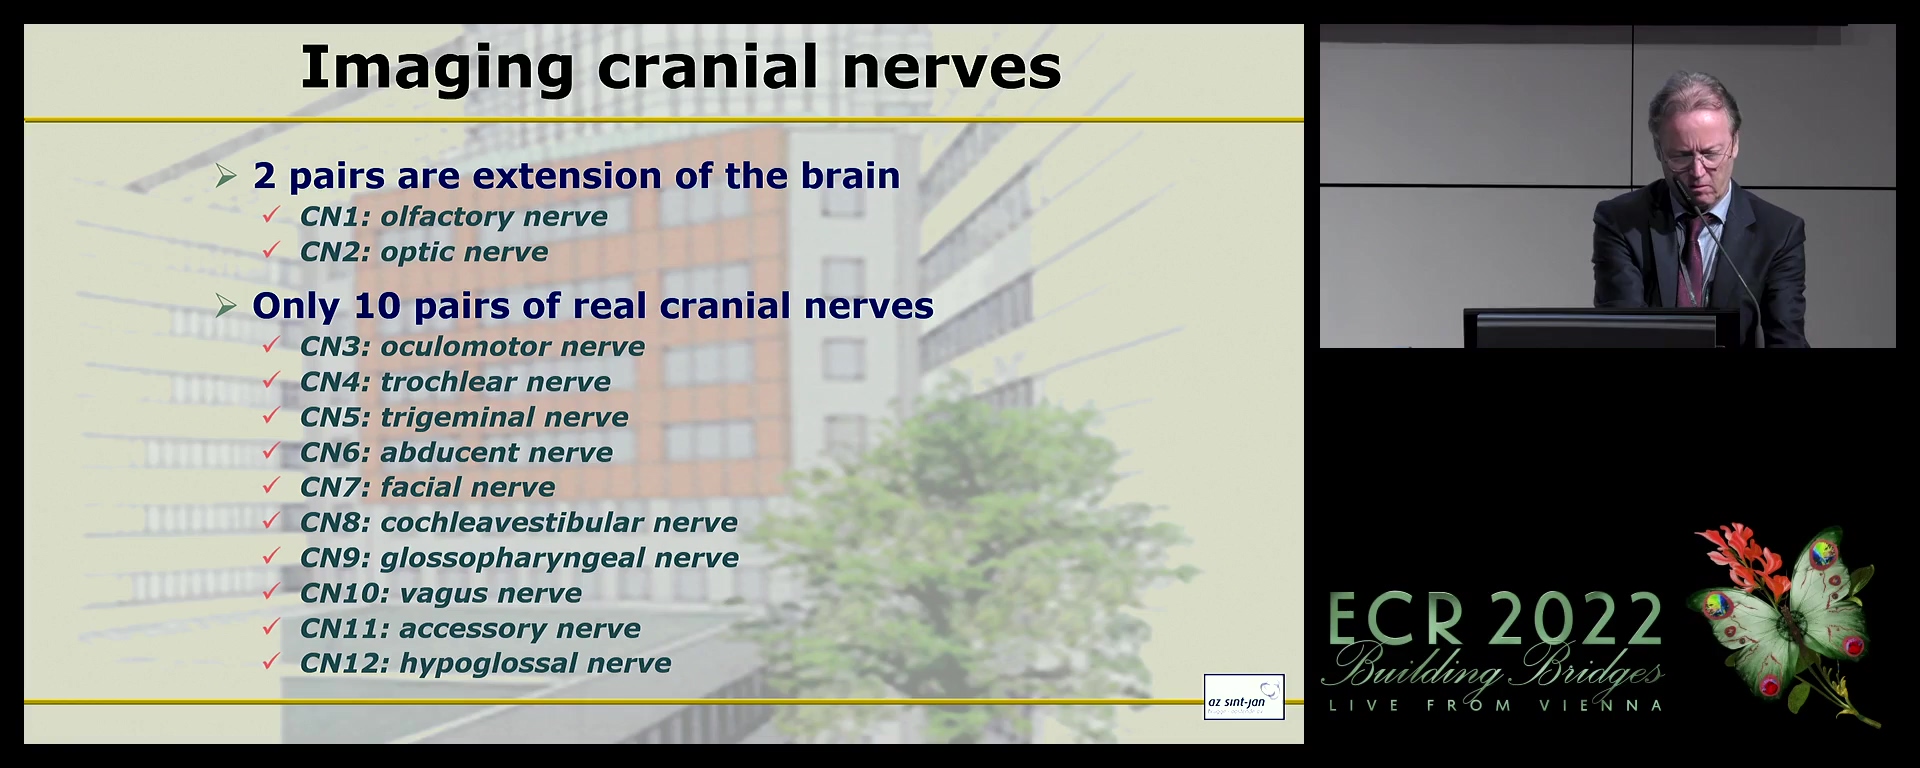 Imaging cranial nerves